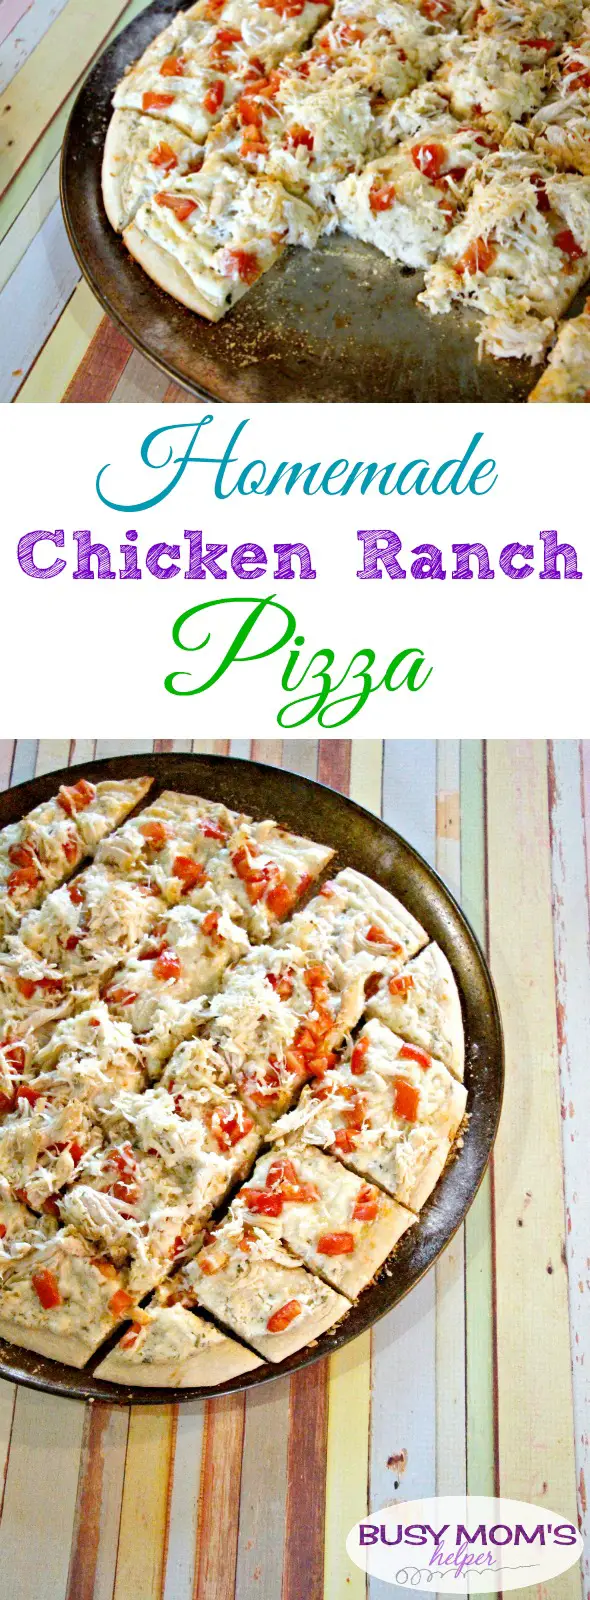 Homemade Chicken Ranch Pizza Recipe